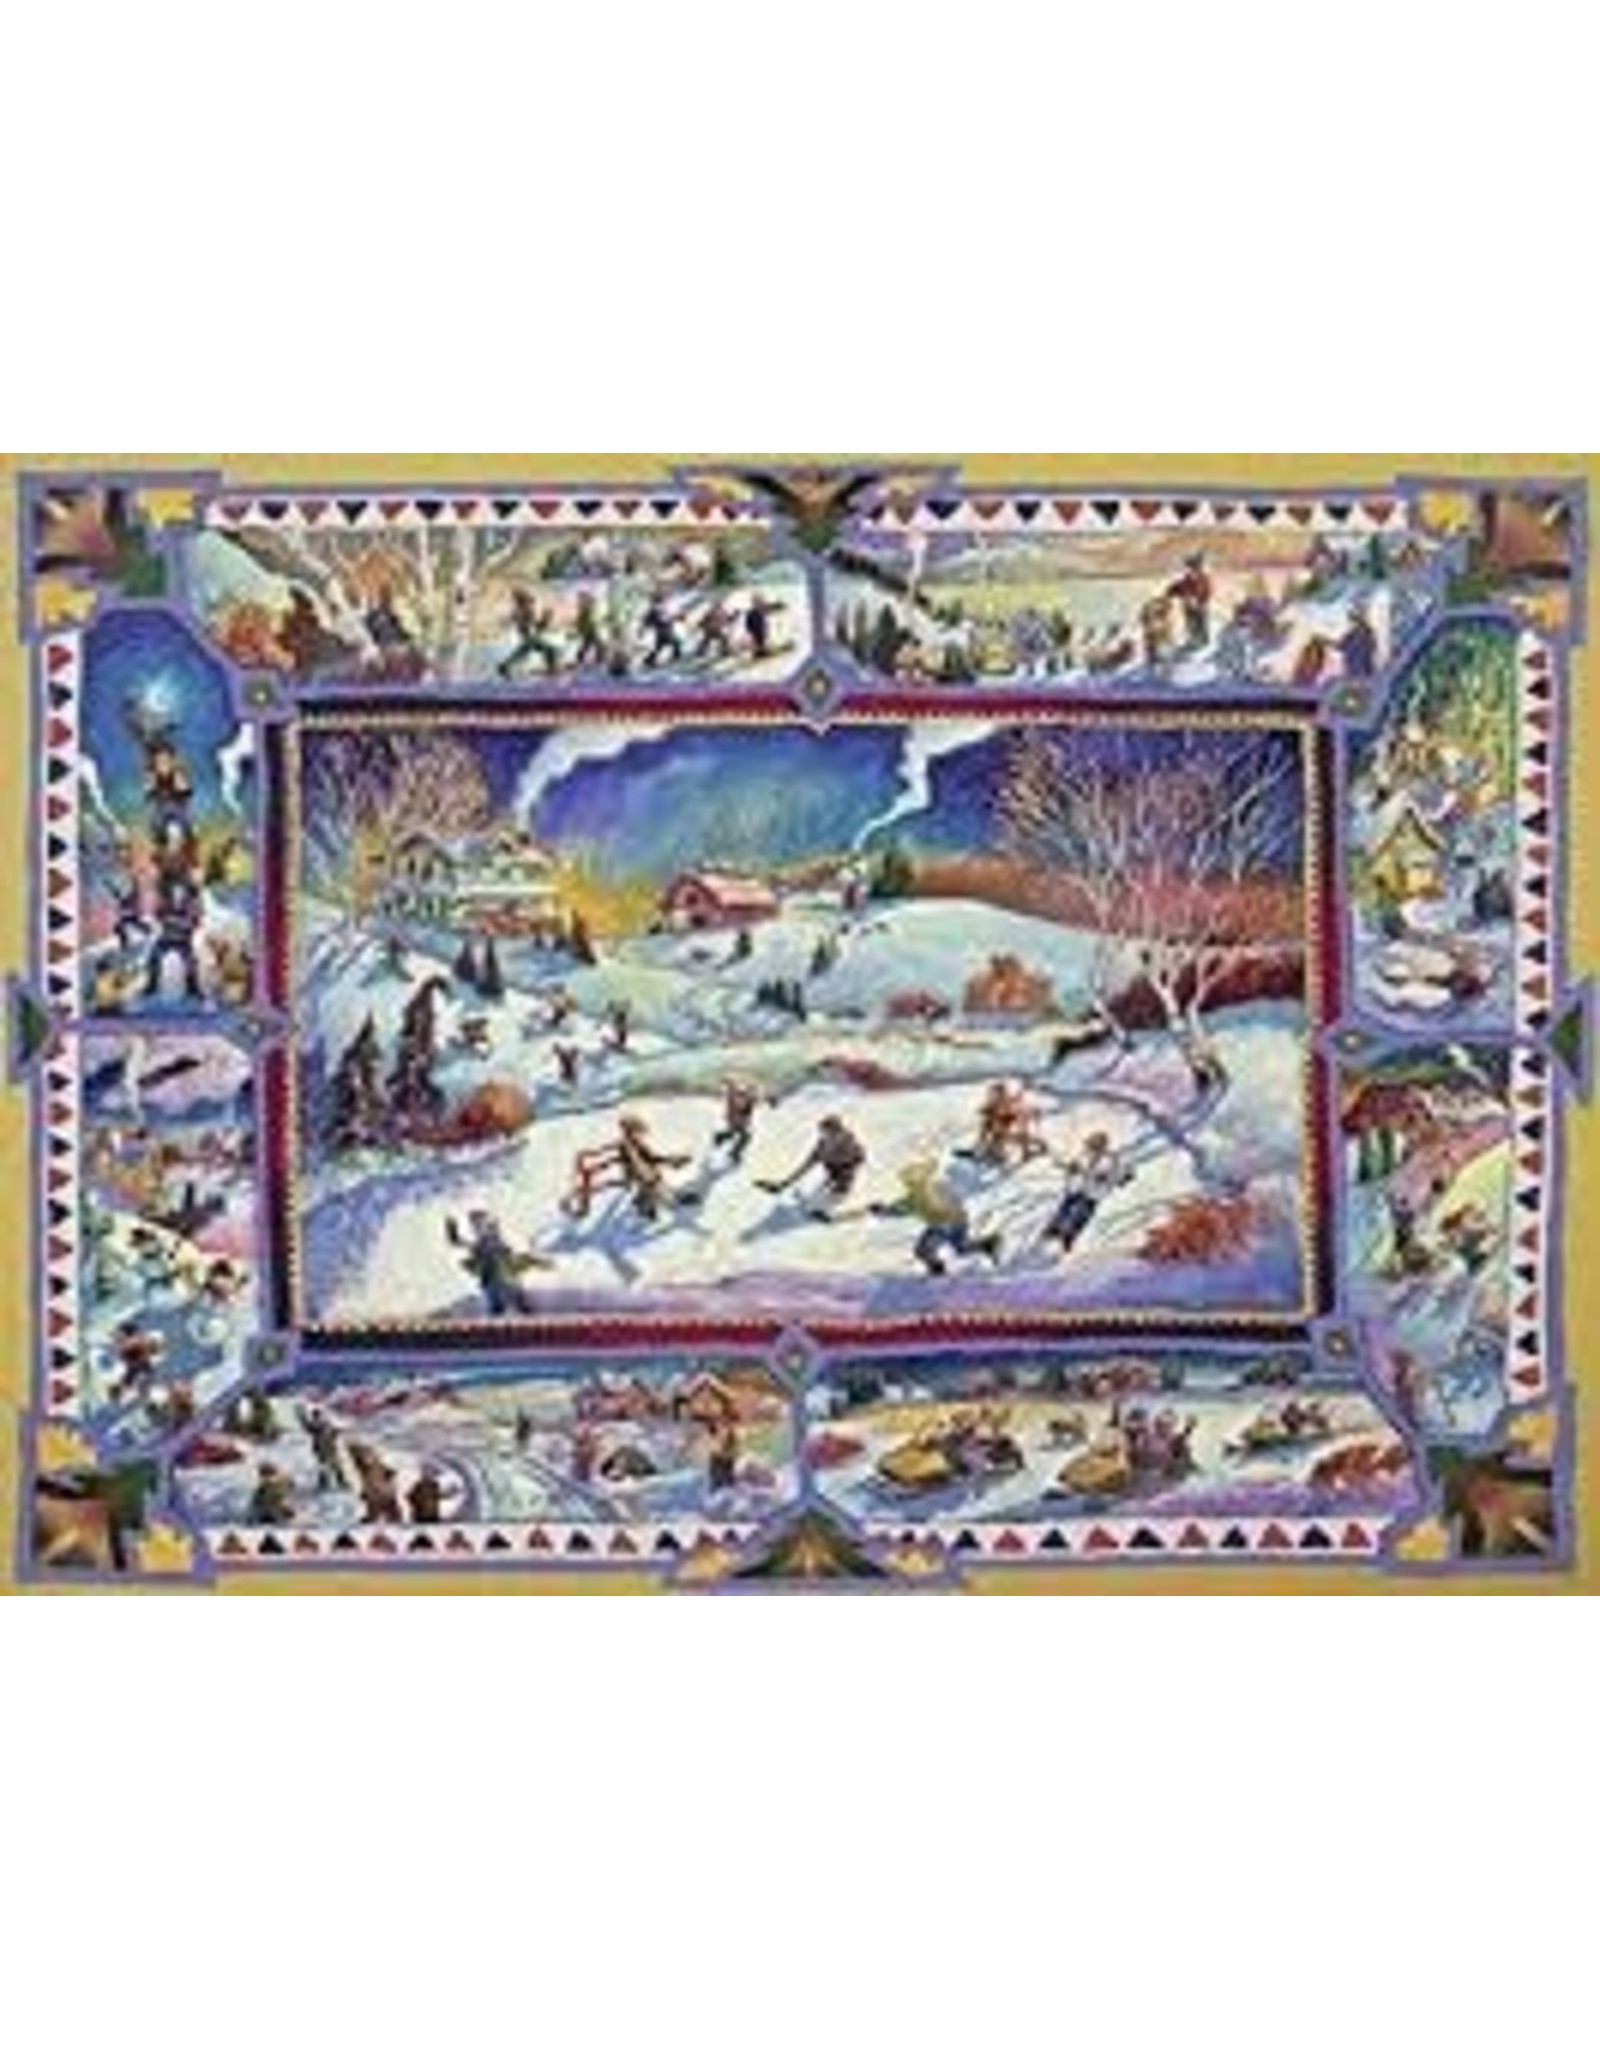 Ravensburger 1000 pcs. Canadian Winter Puzzle